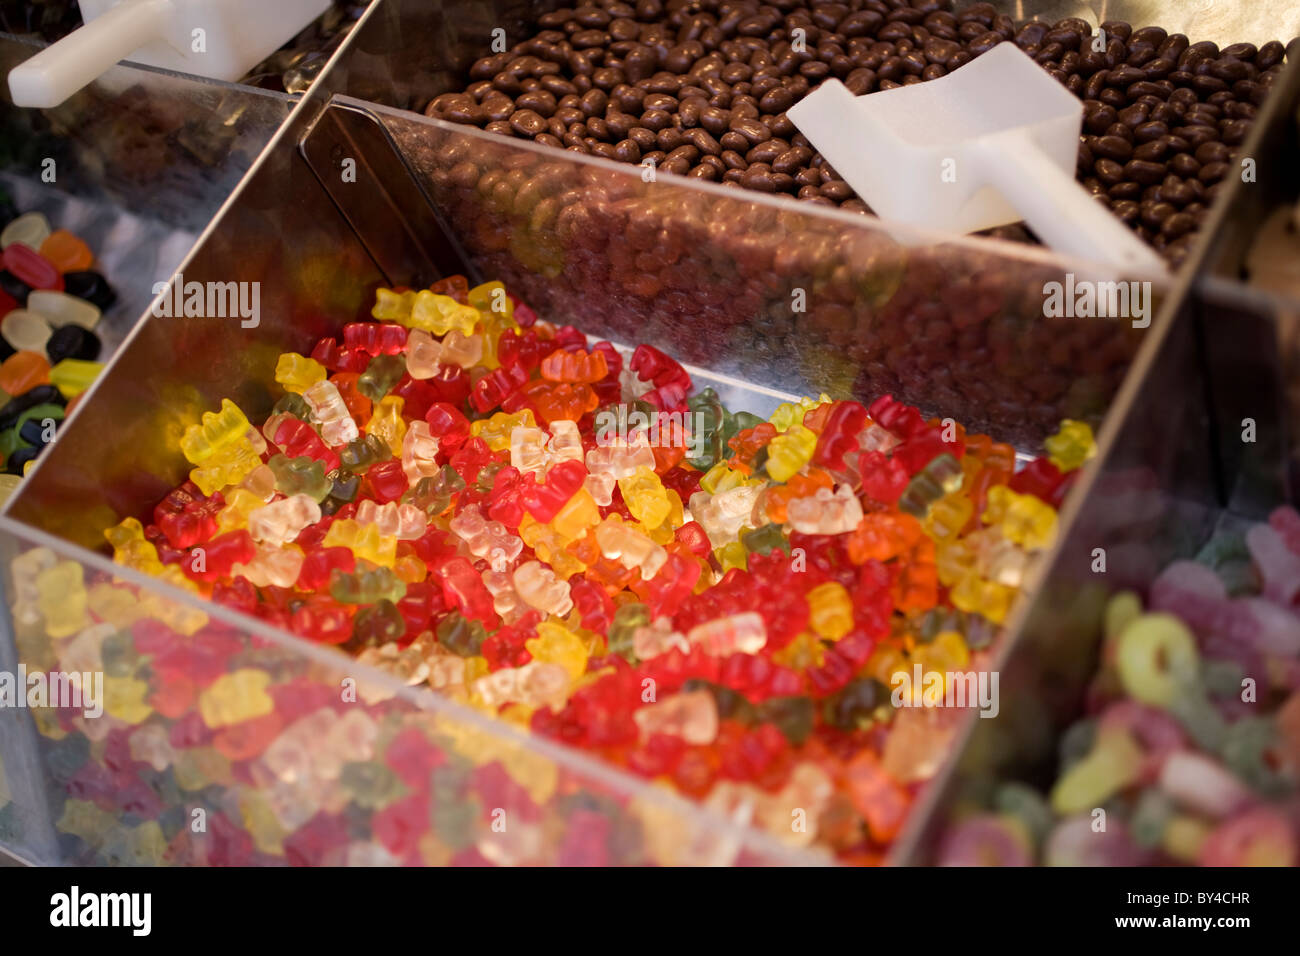 Un bac rempli de bonbons ours gummi, parmi d'autres bacs de bonbons Banque D'Images